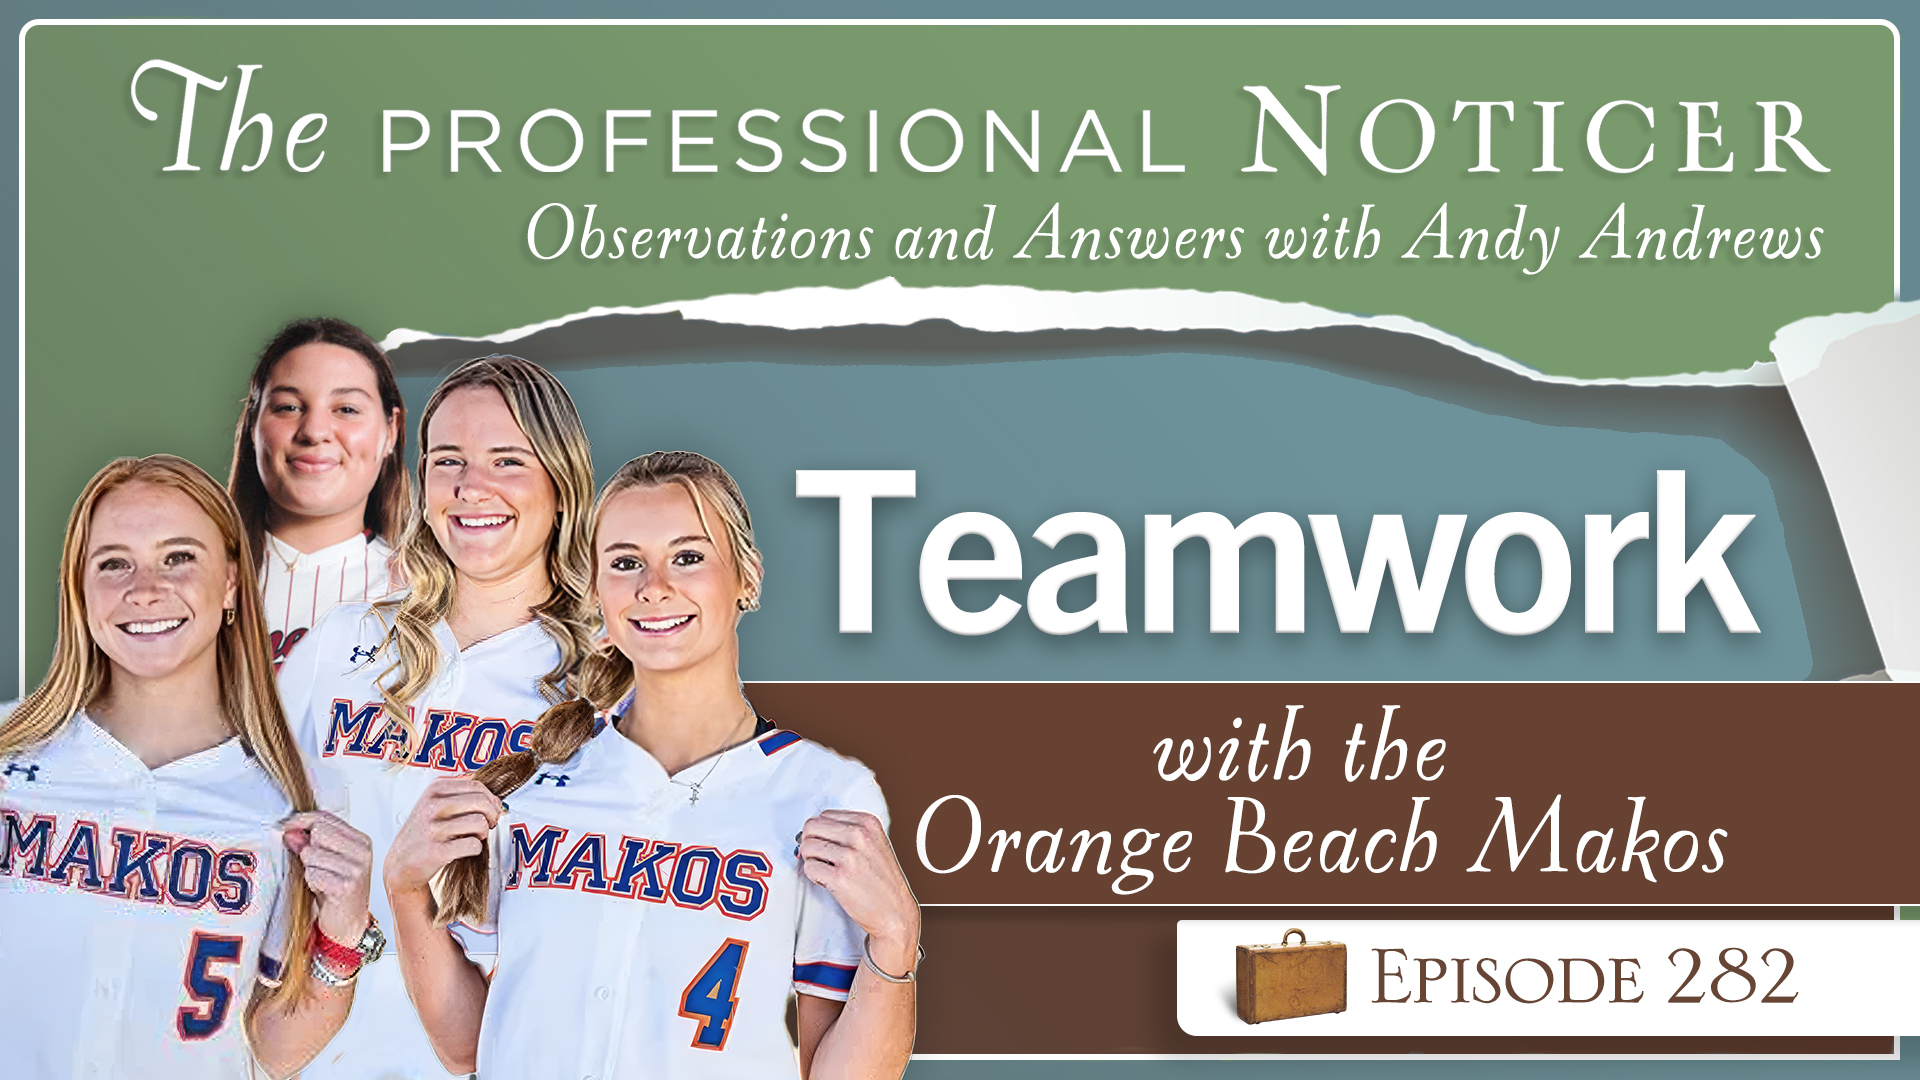 Teamwork with the Orange Beach Makos